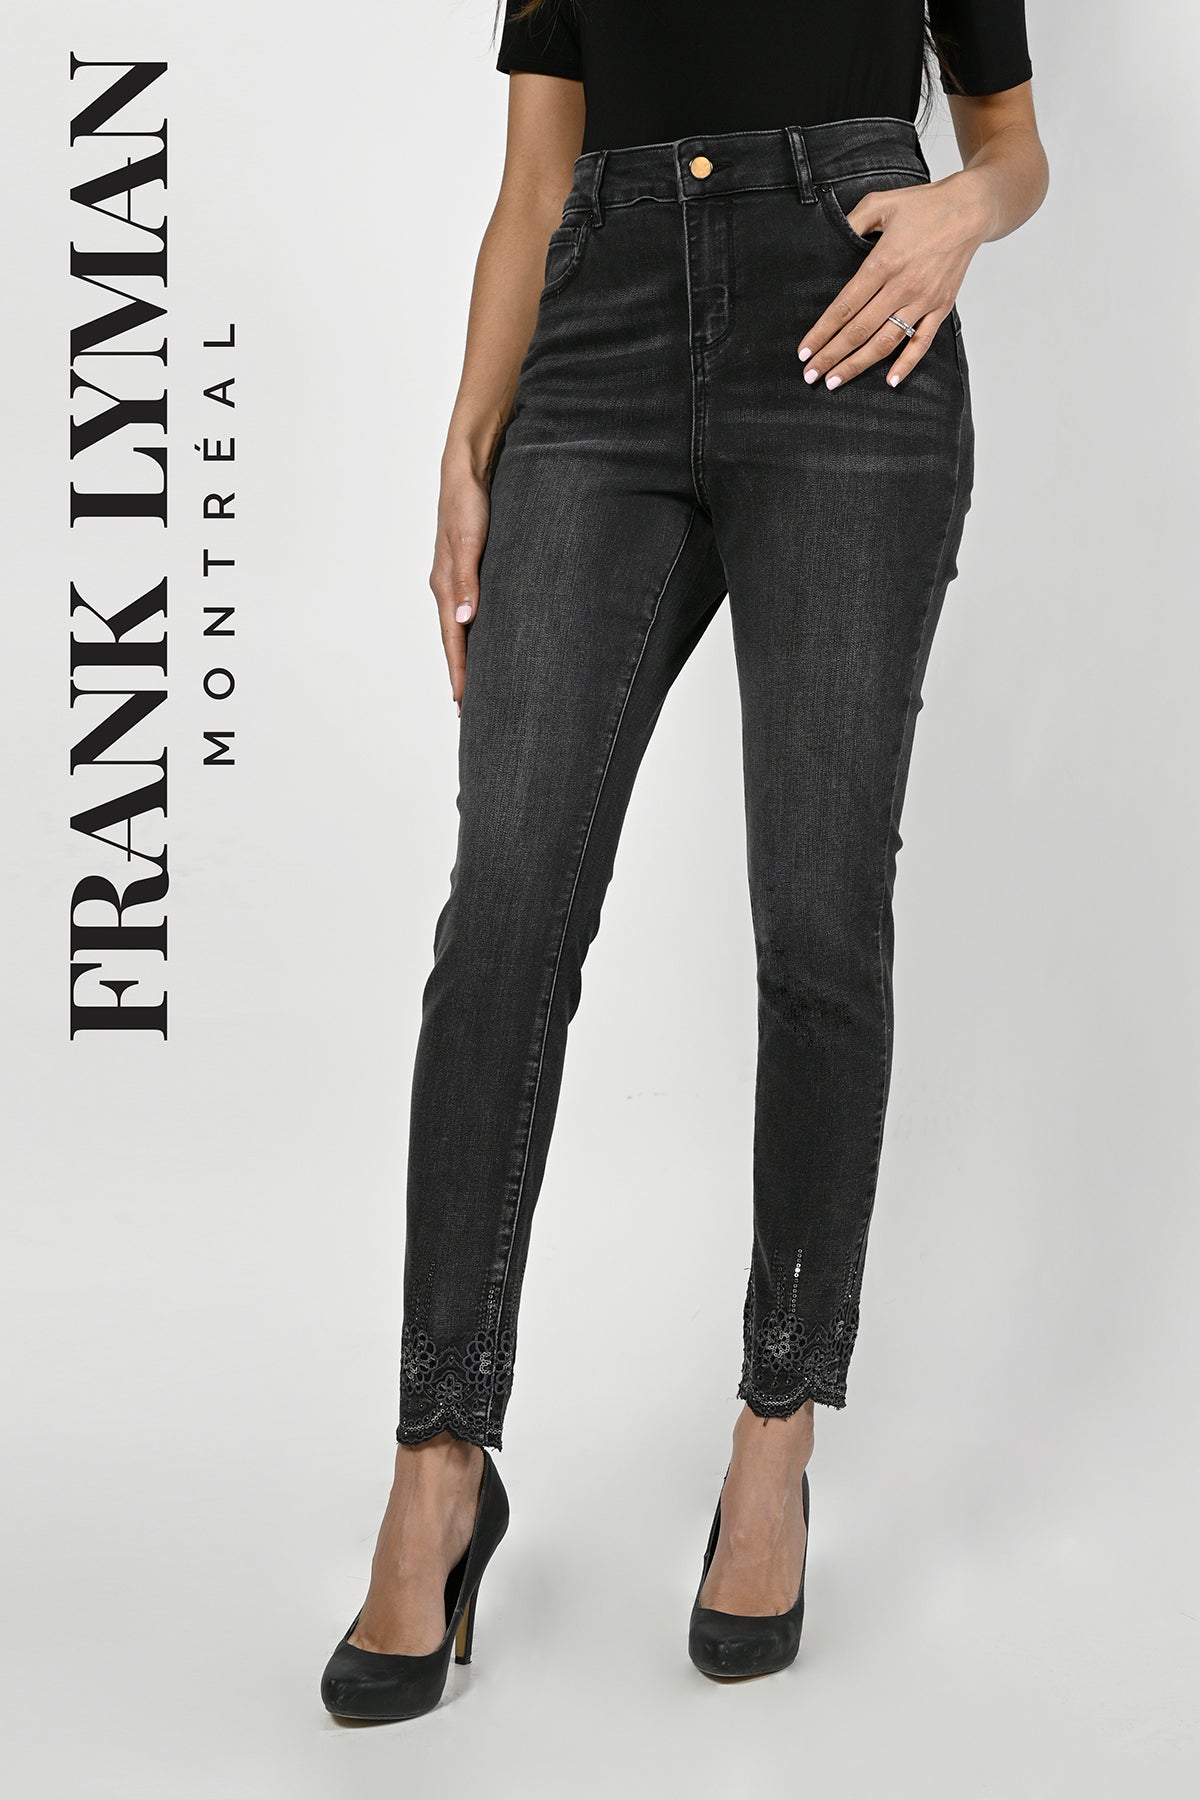 Frank Lyman Montreal Jeans-Buy Frank Lyman Montreal Jeans Online-Frank Lyman Montreal Online Jean Shop-Black Jeans